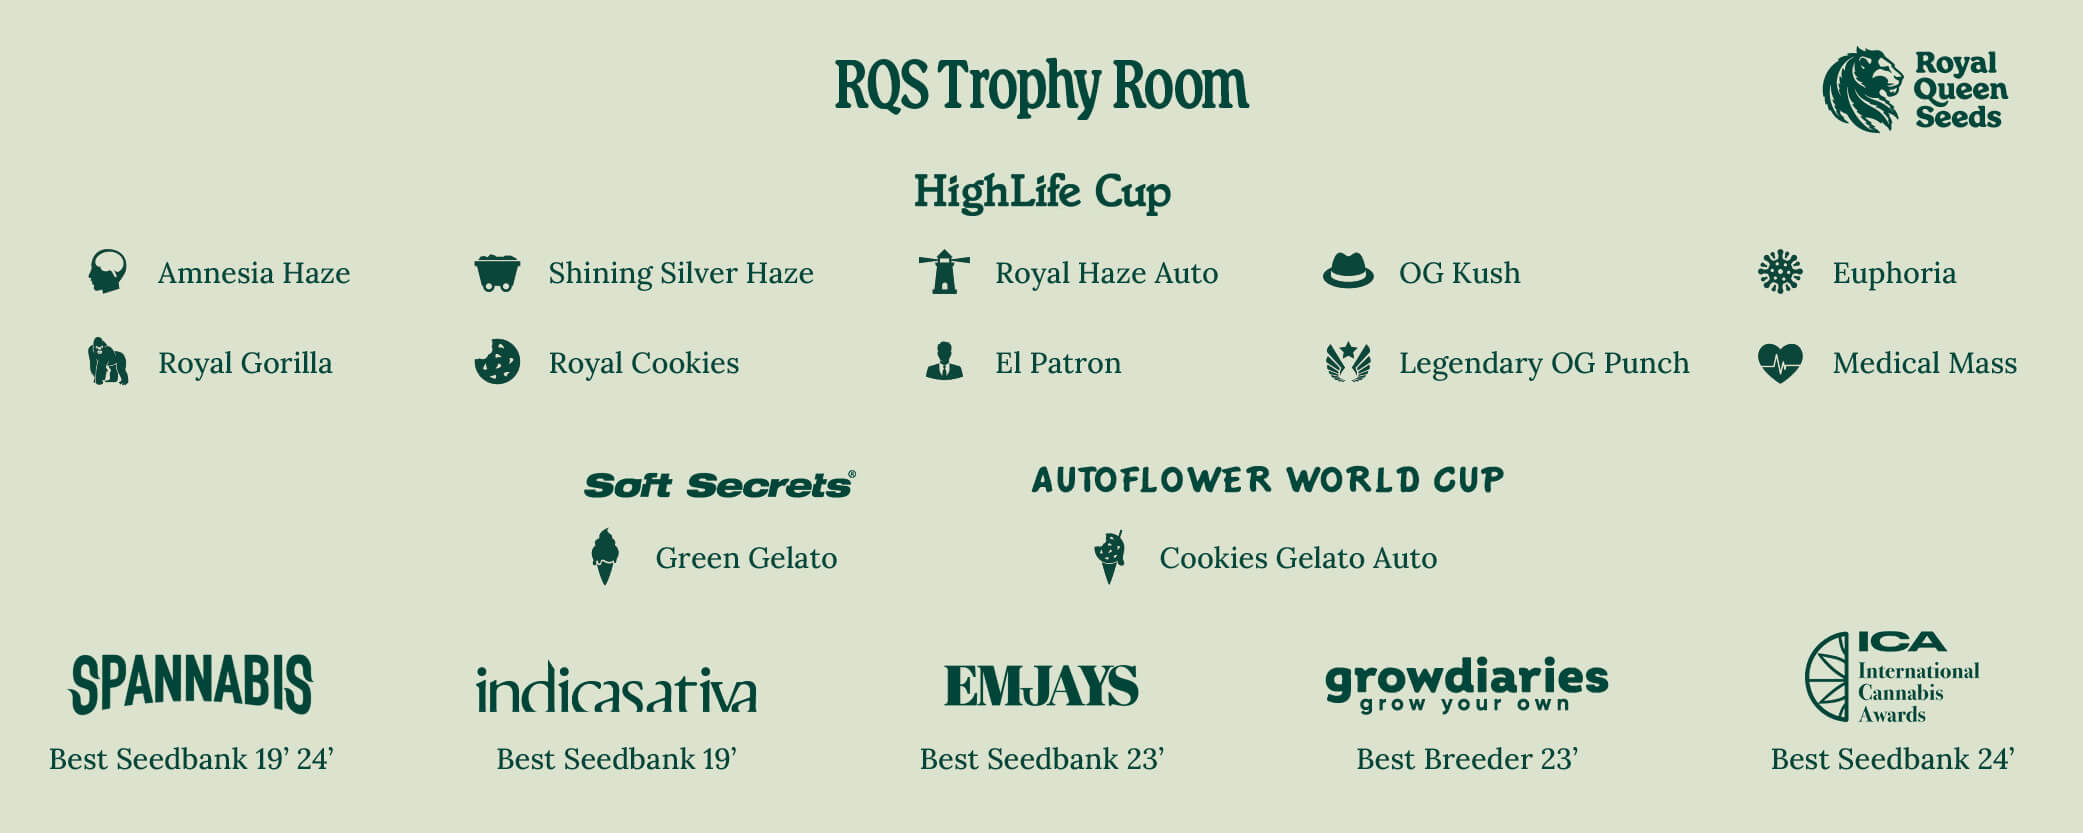 About ÇUs Trophy Room